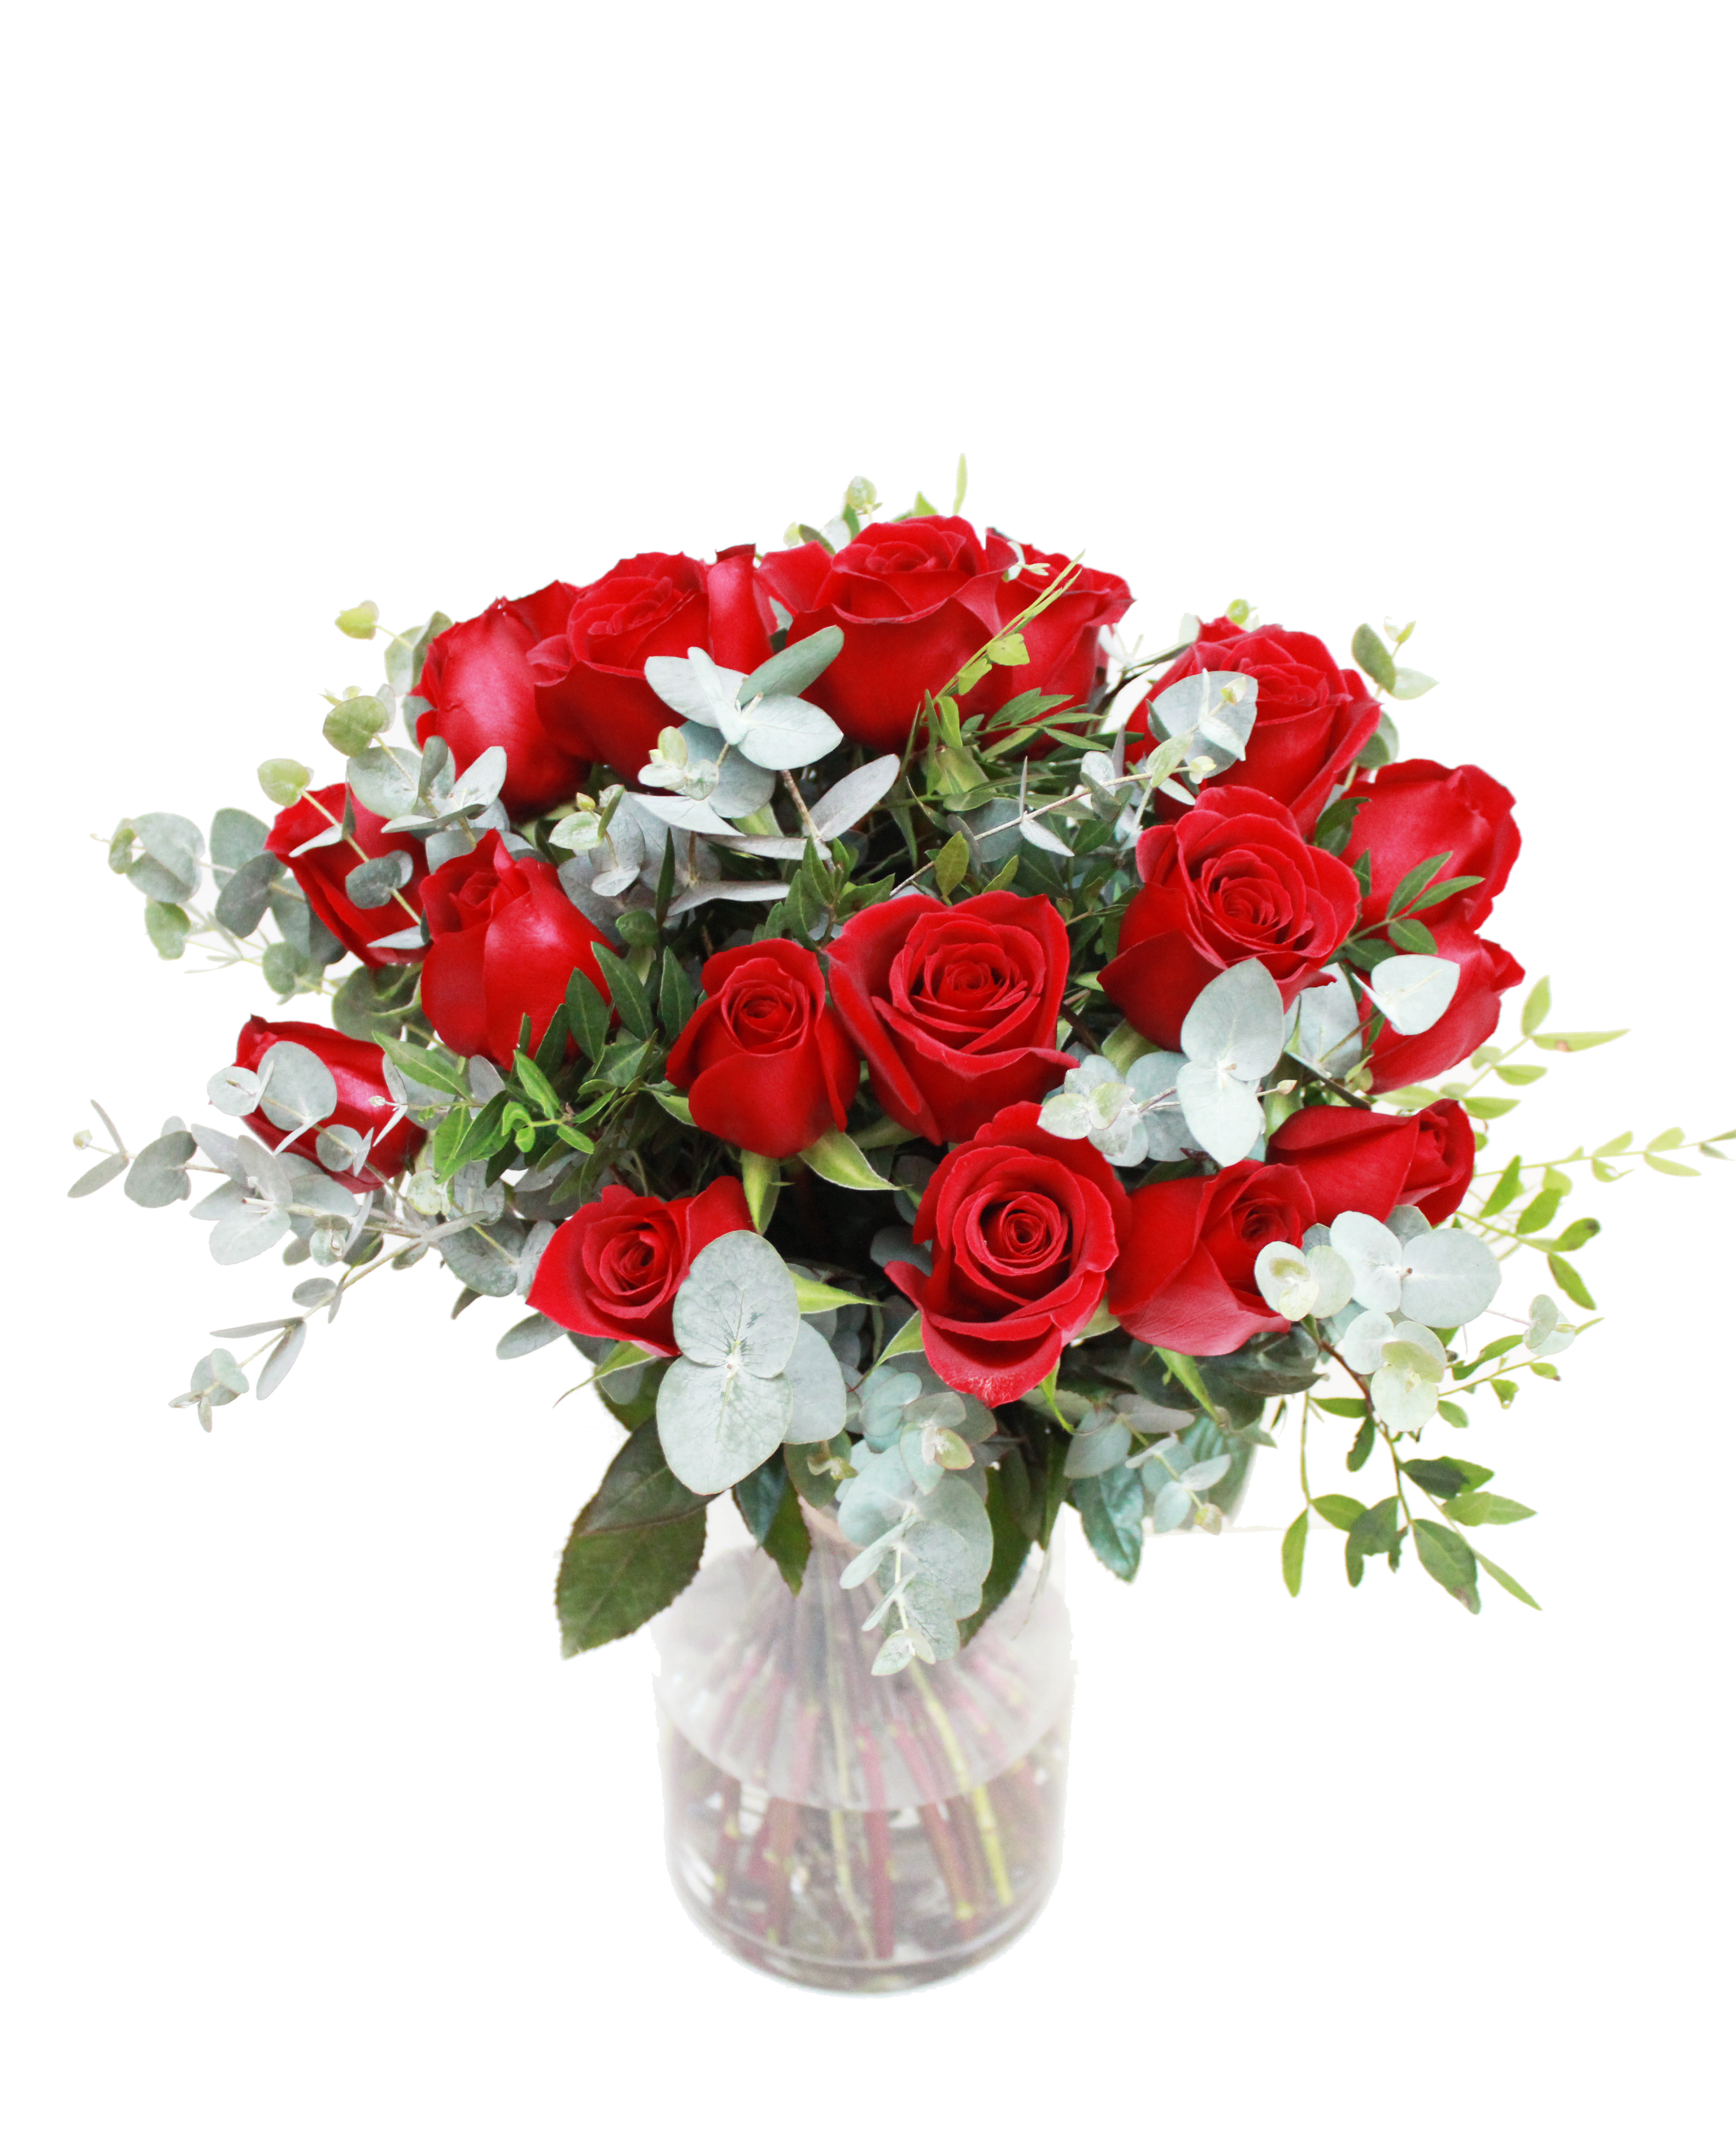 30 Lovable Teddy Bear Vase 2024 free download teddy bear vase of 24 red roses in vase with regard to 24 red roses in vasev3